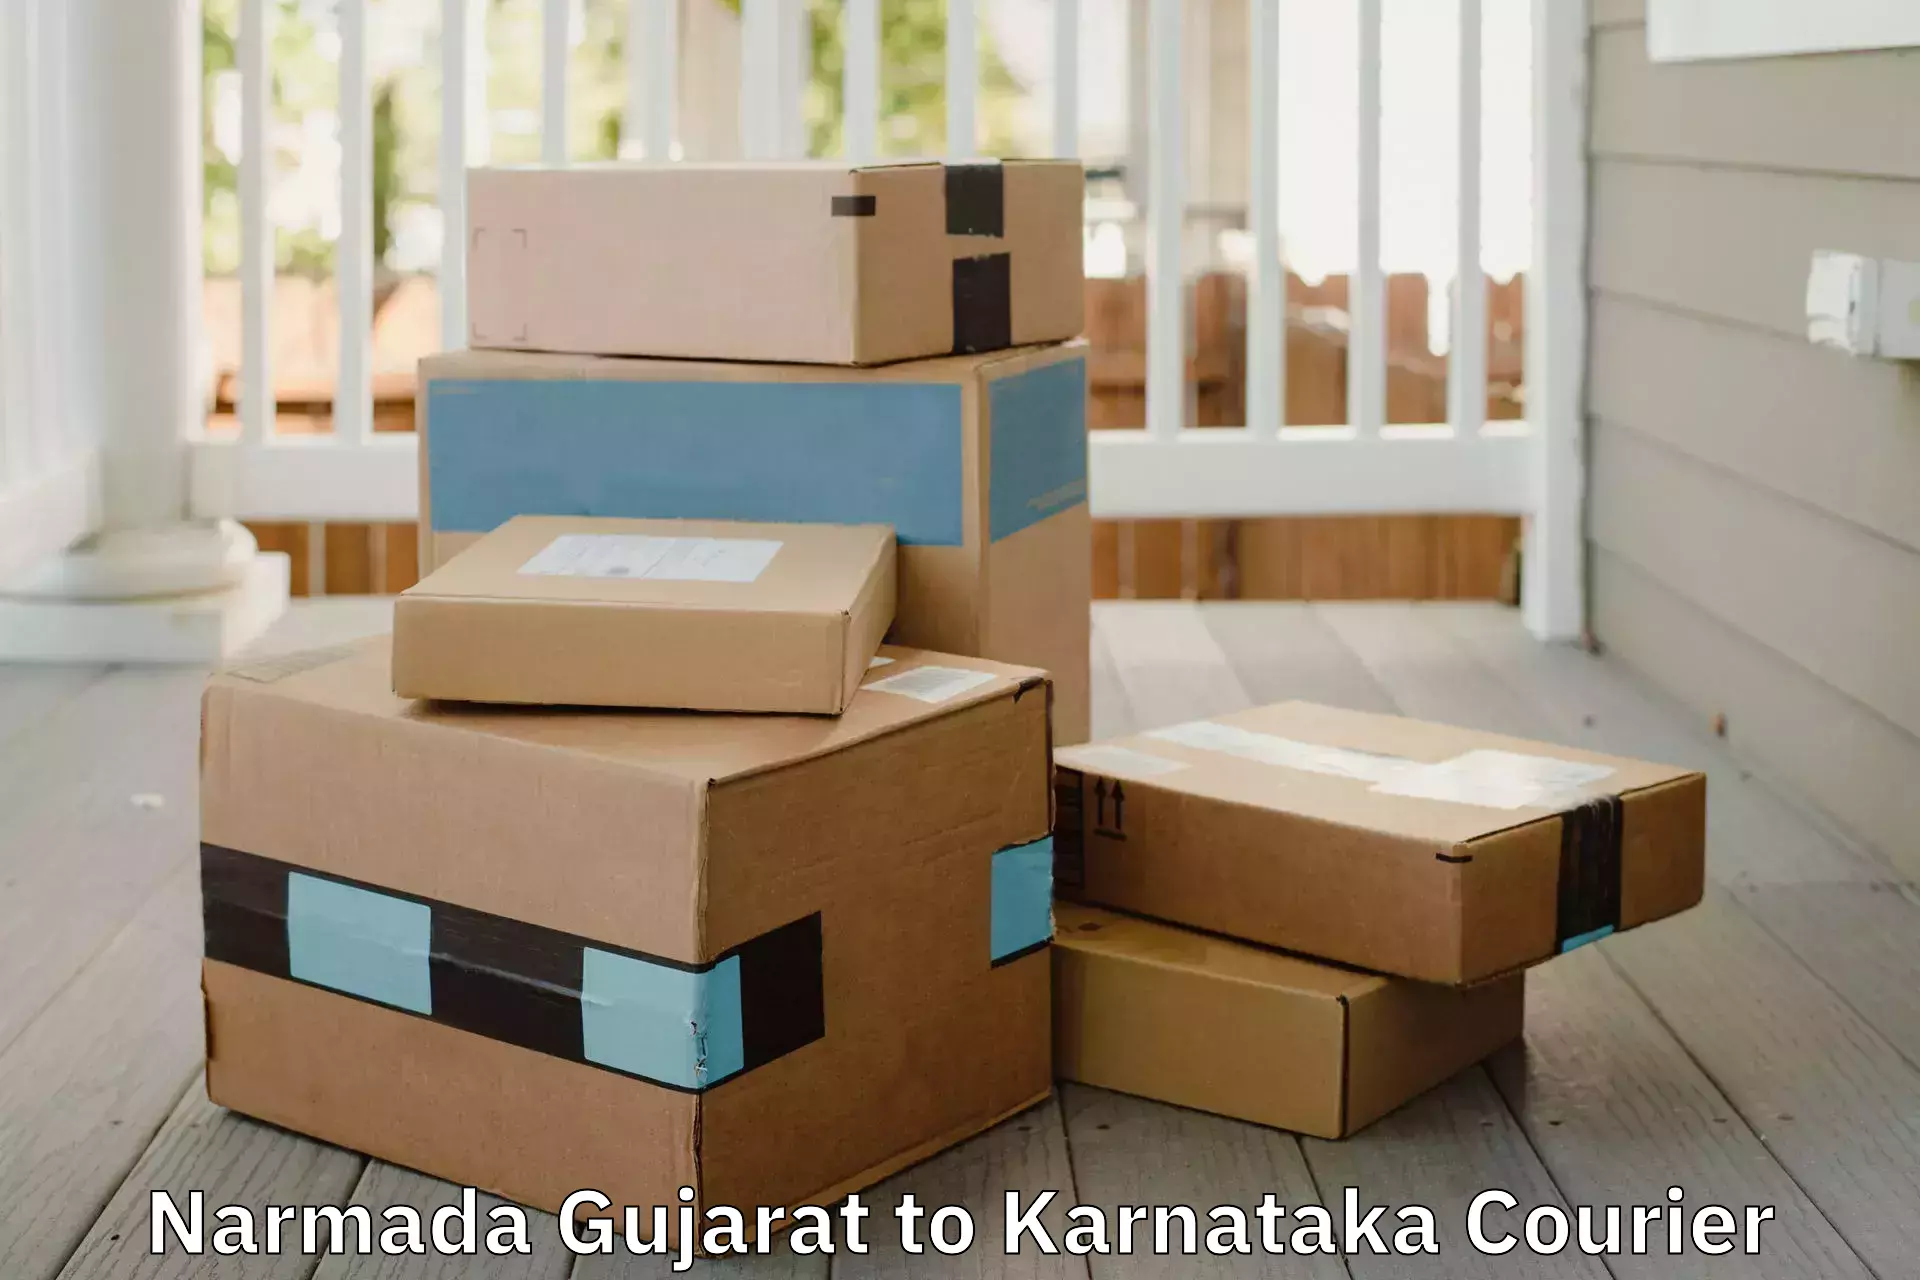 Professional moving assistance Narmada Gujarat to Yenepoya Mangalore